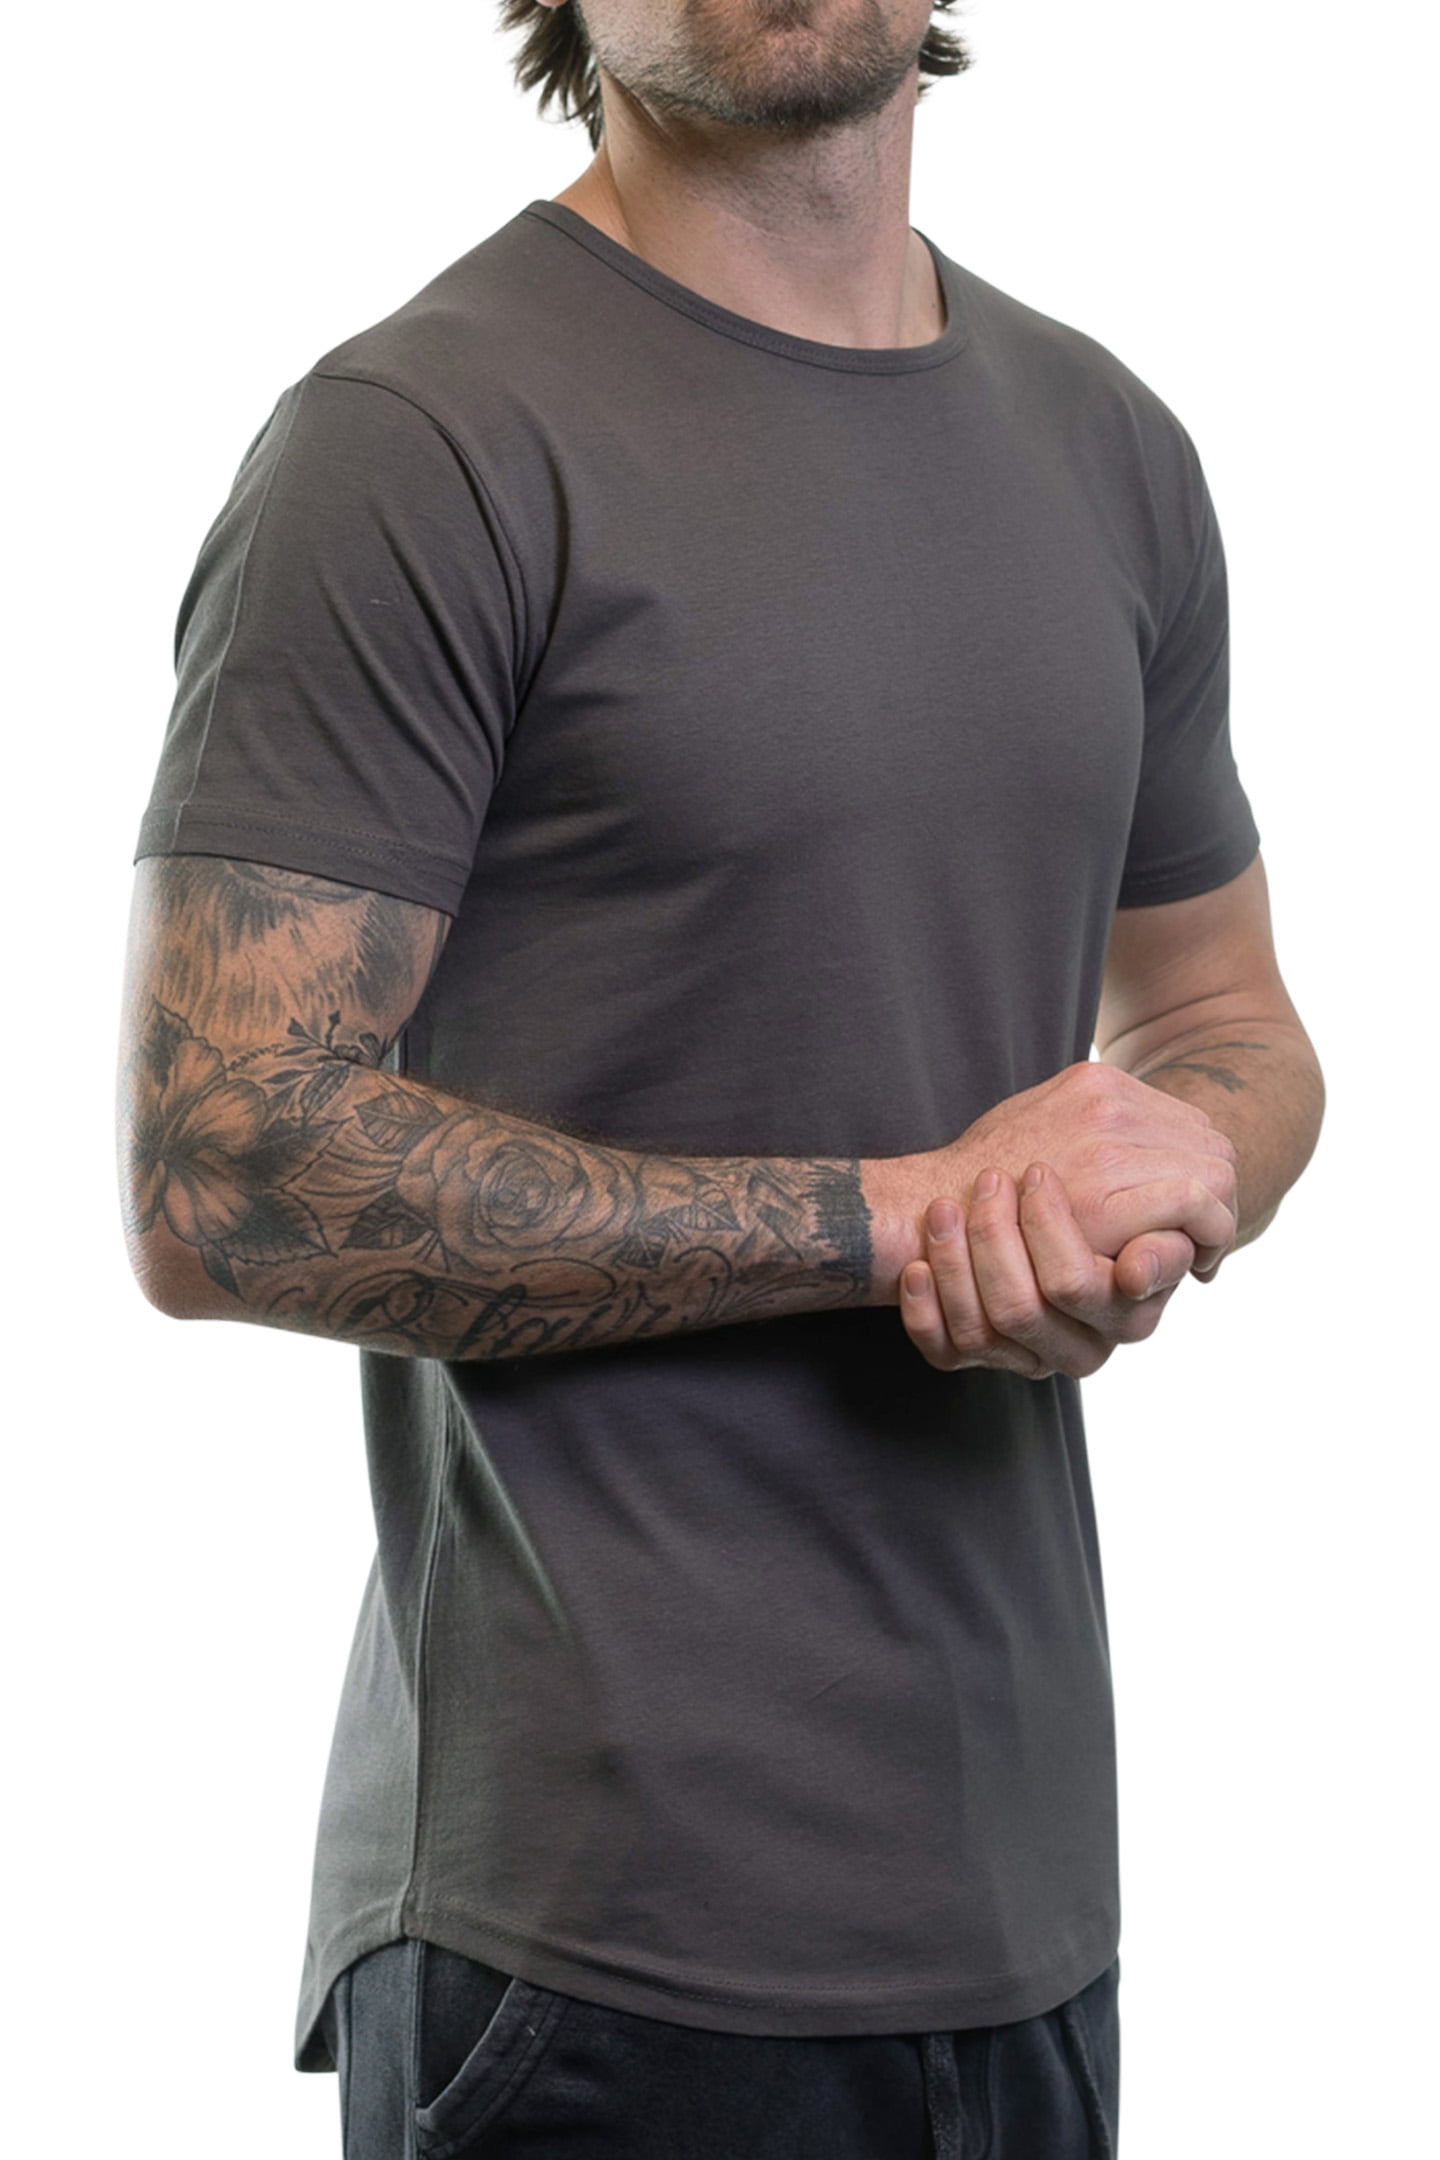 ShirtBANC Hipster Hip Hop Long Drop Cut Mens Shirt Curved Hem Solid Tshirts